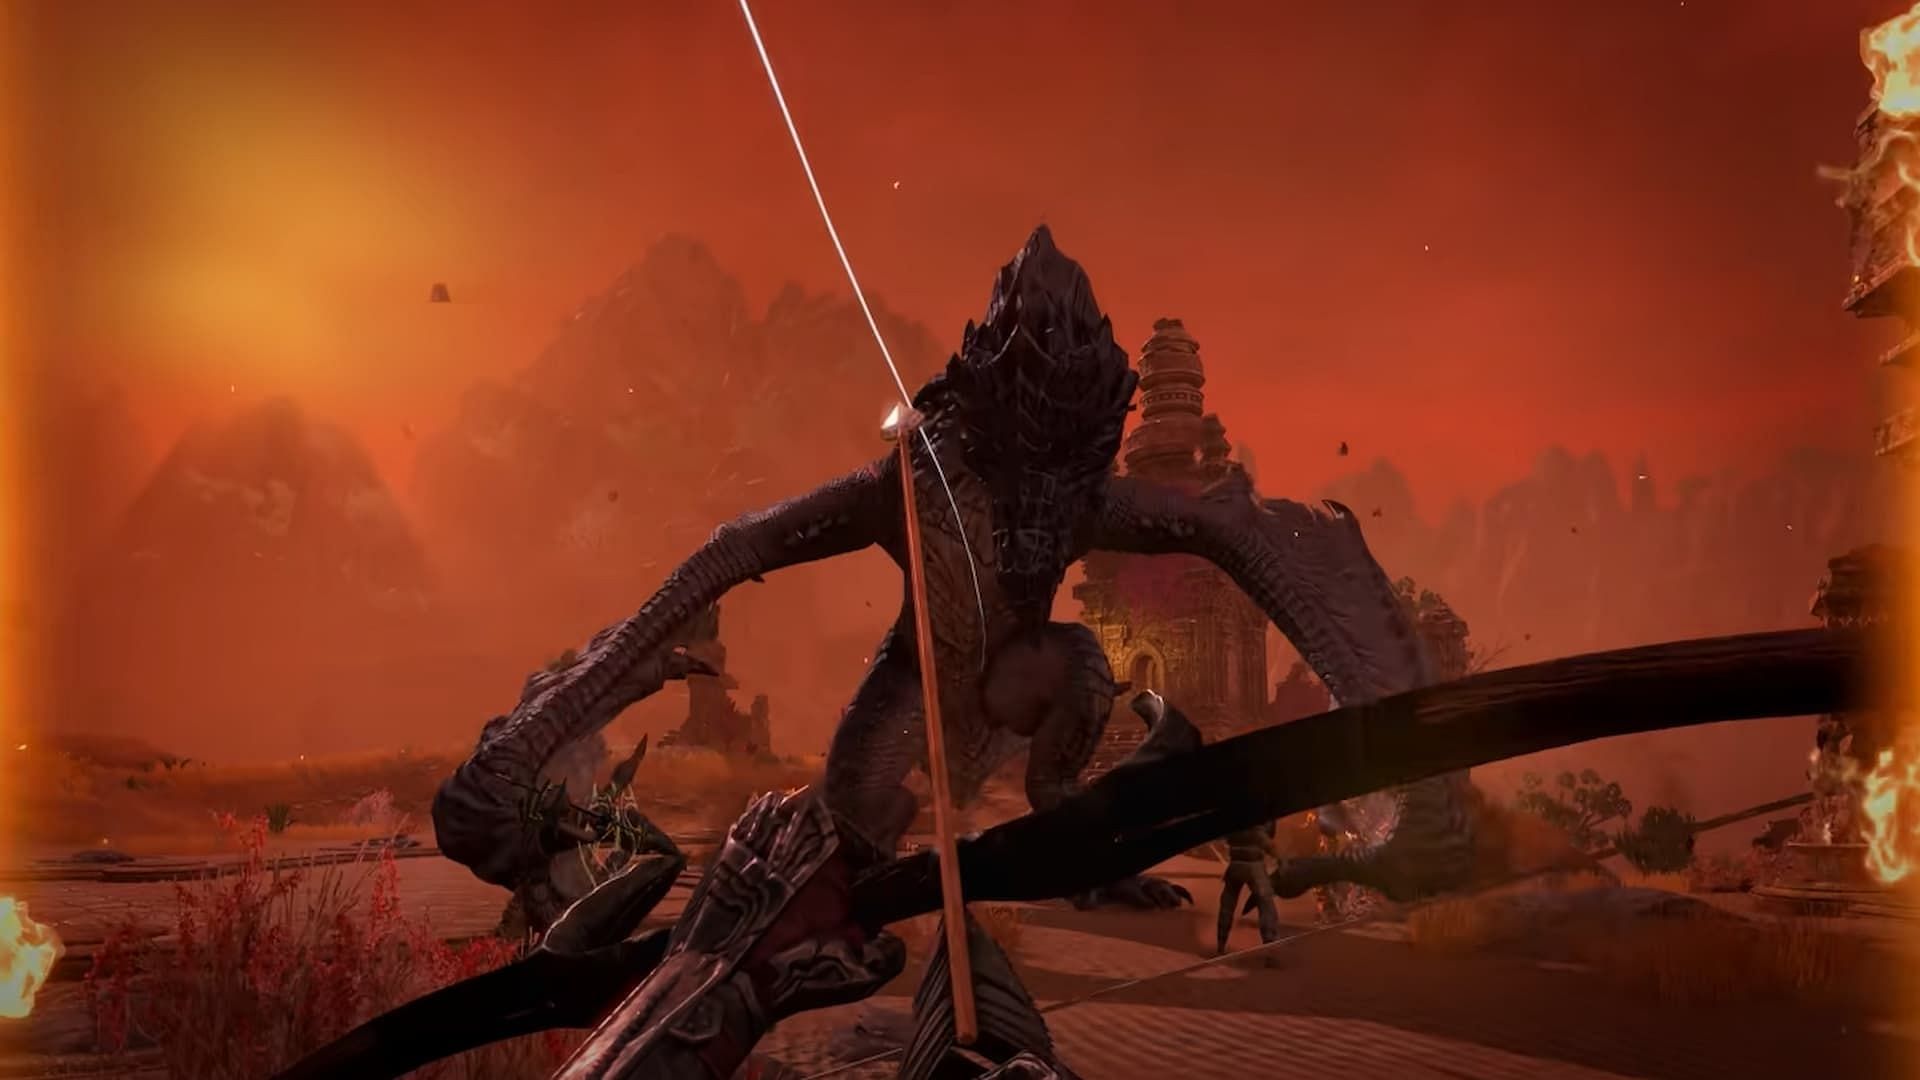 Adventurer battling a dragon in The Elder Scrolls Online